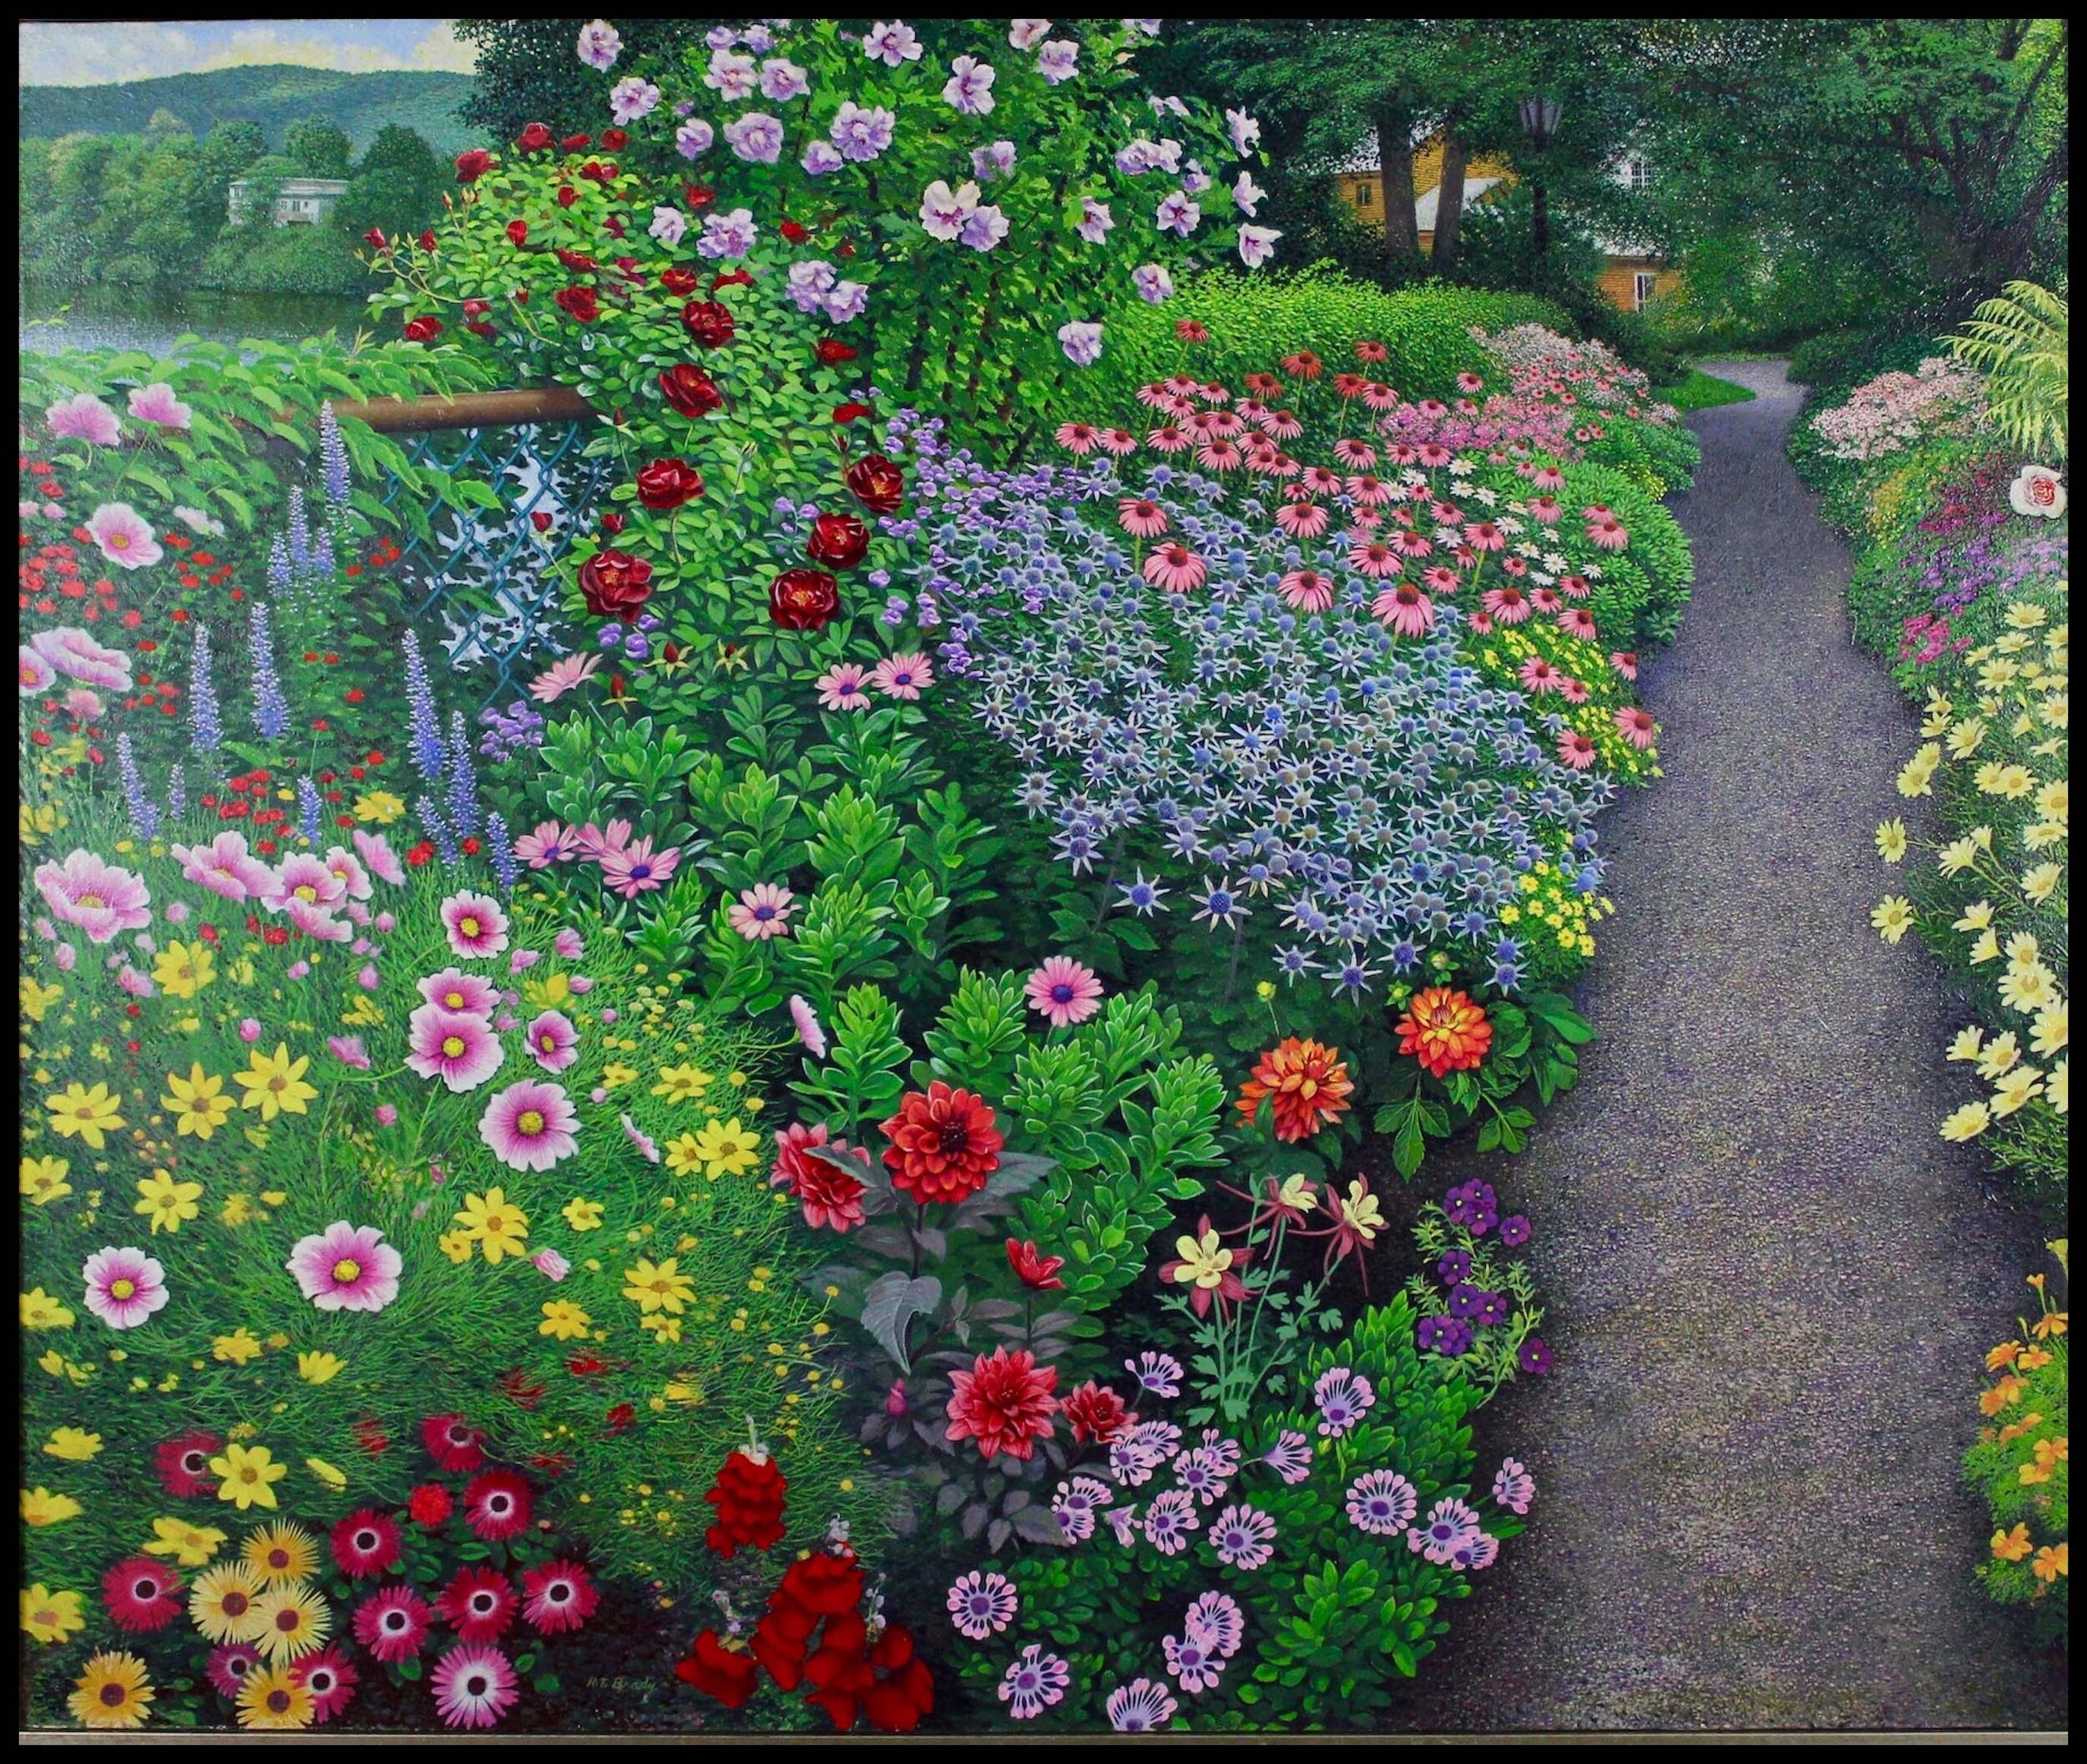  Bridge of Flowers (35”x43”) Oil on Linen 